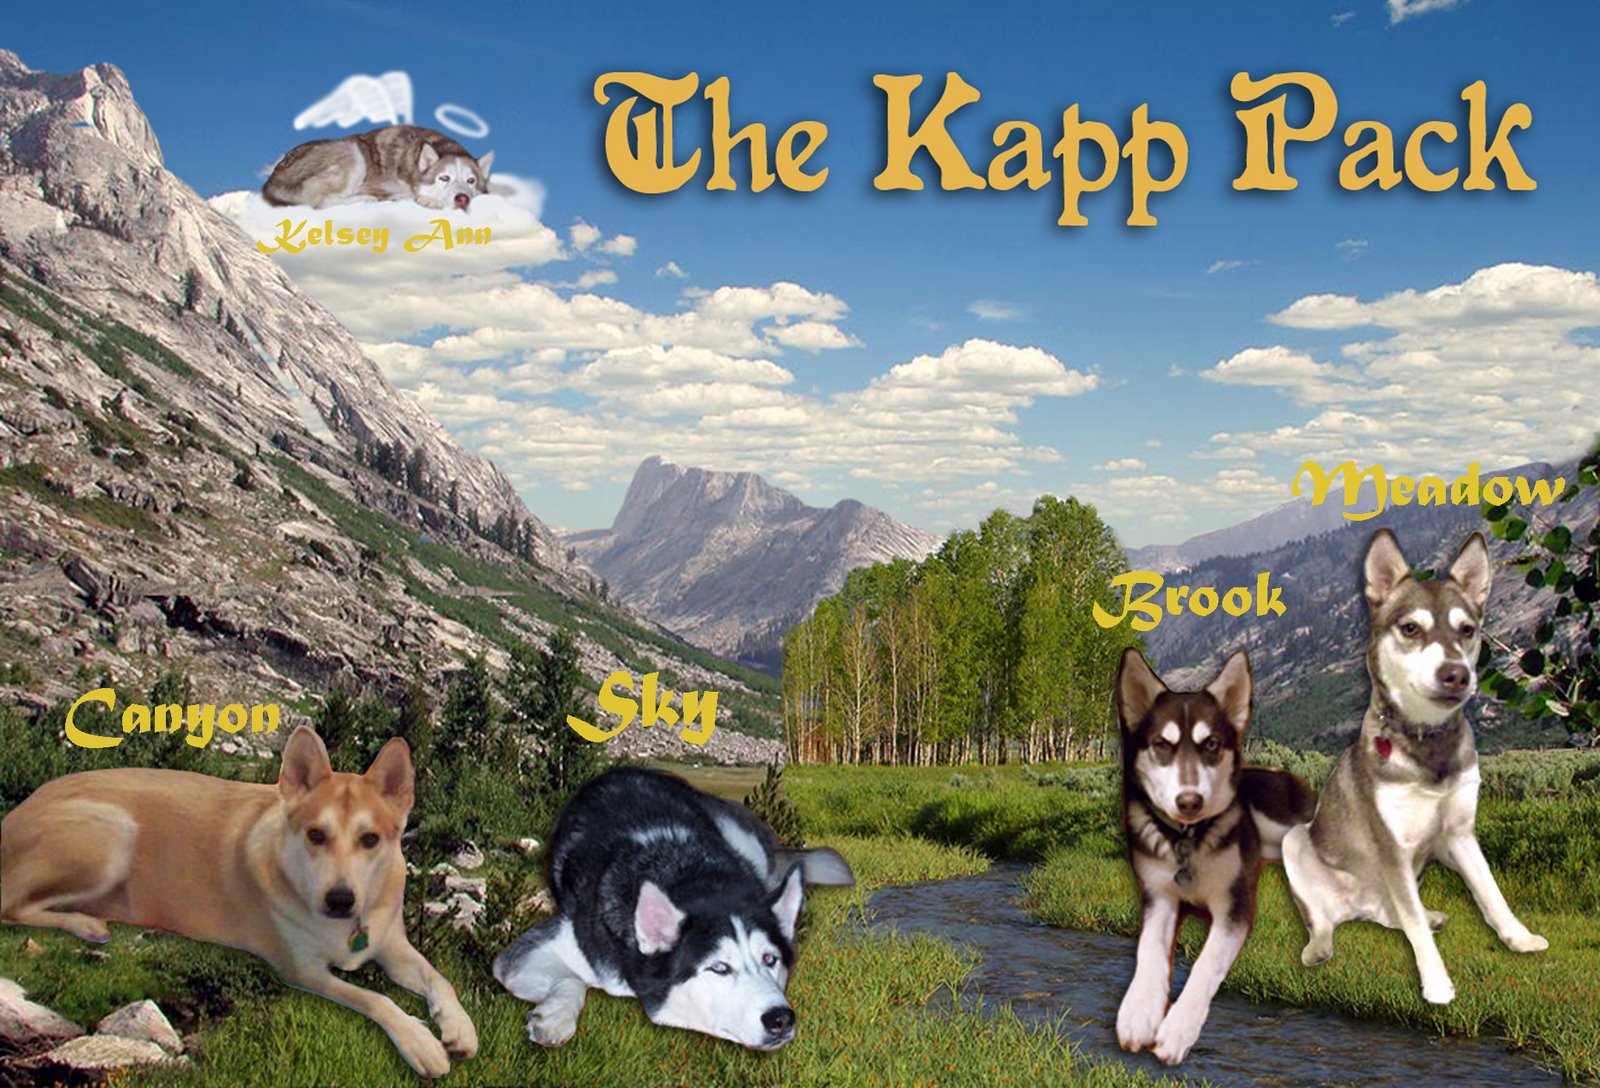 The Kapp Pack